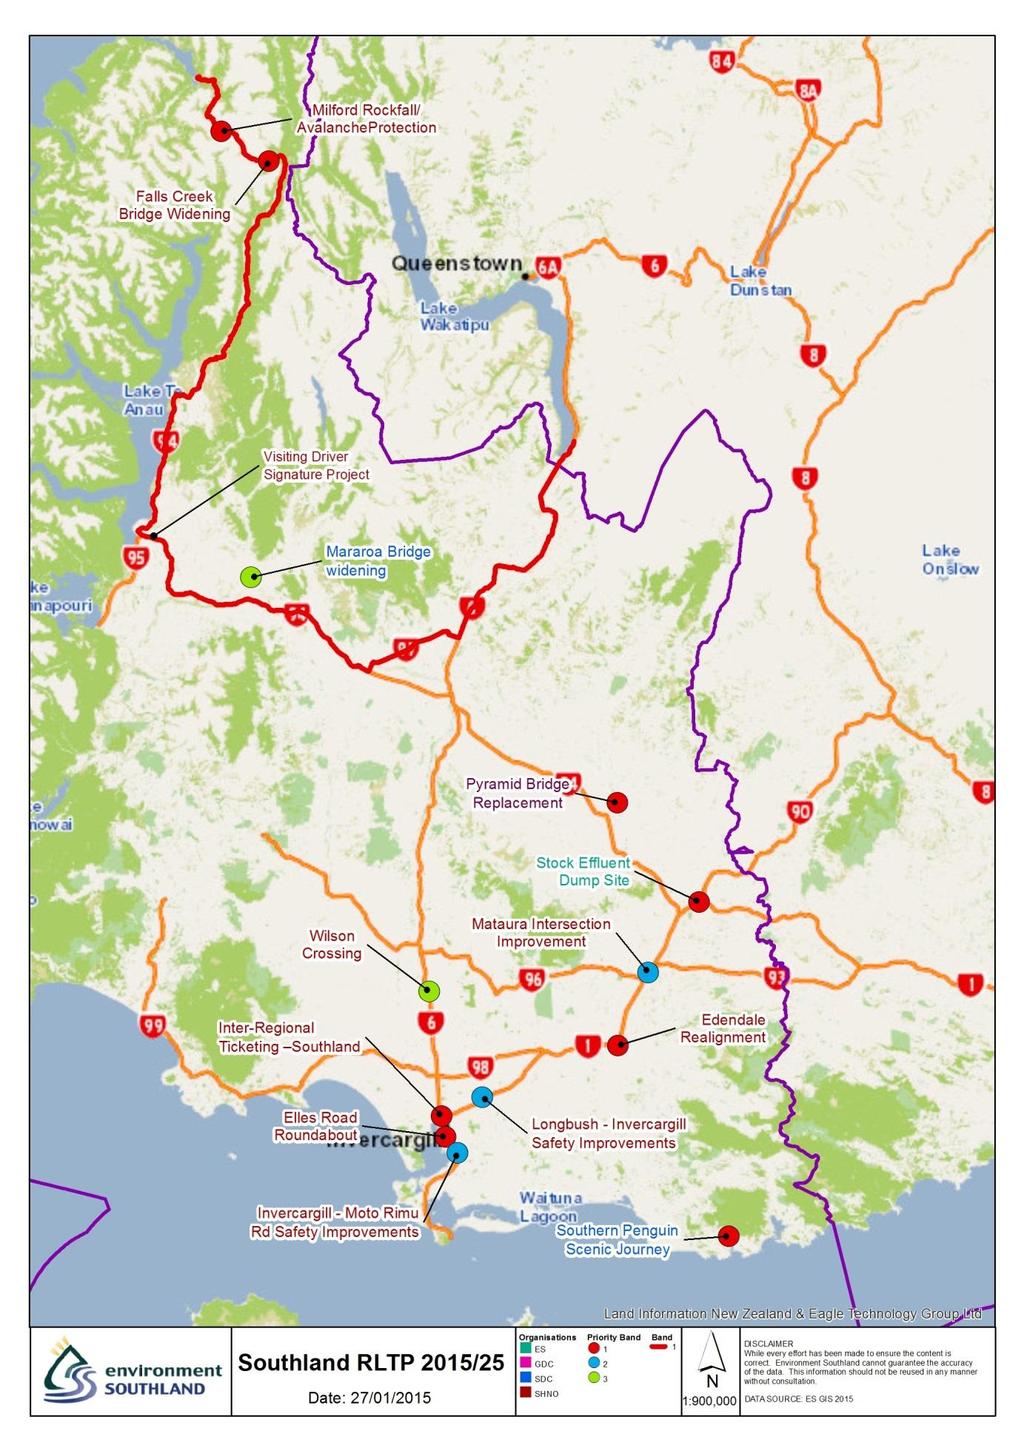 Draft Southland Regional Land Transport Plan 2015-2021